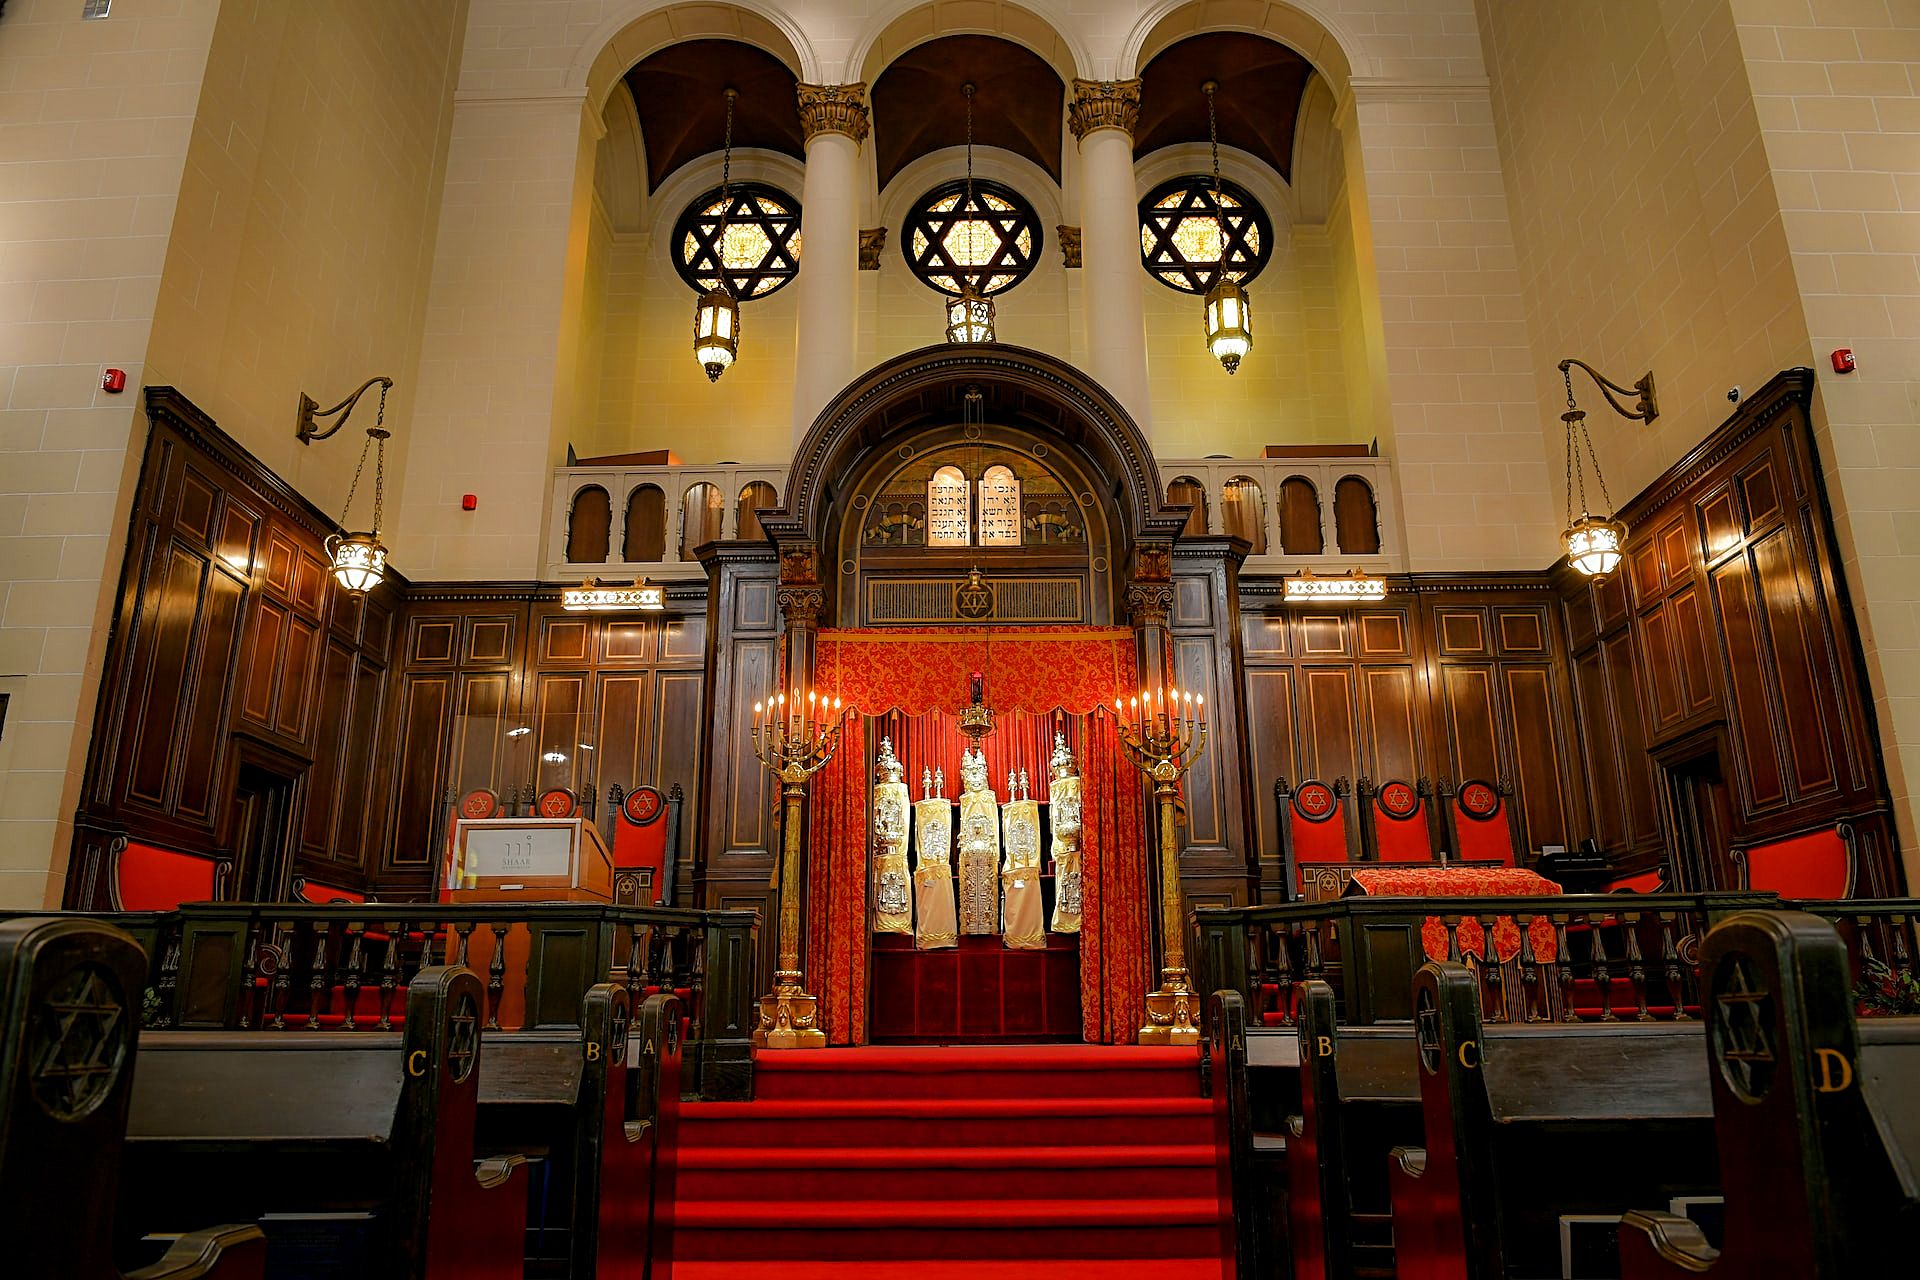 The interior of a synagogue